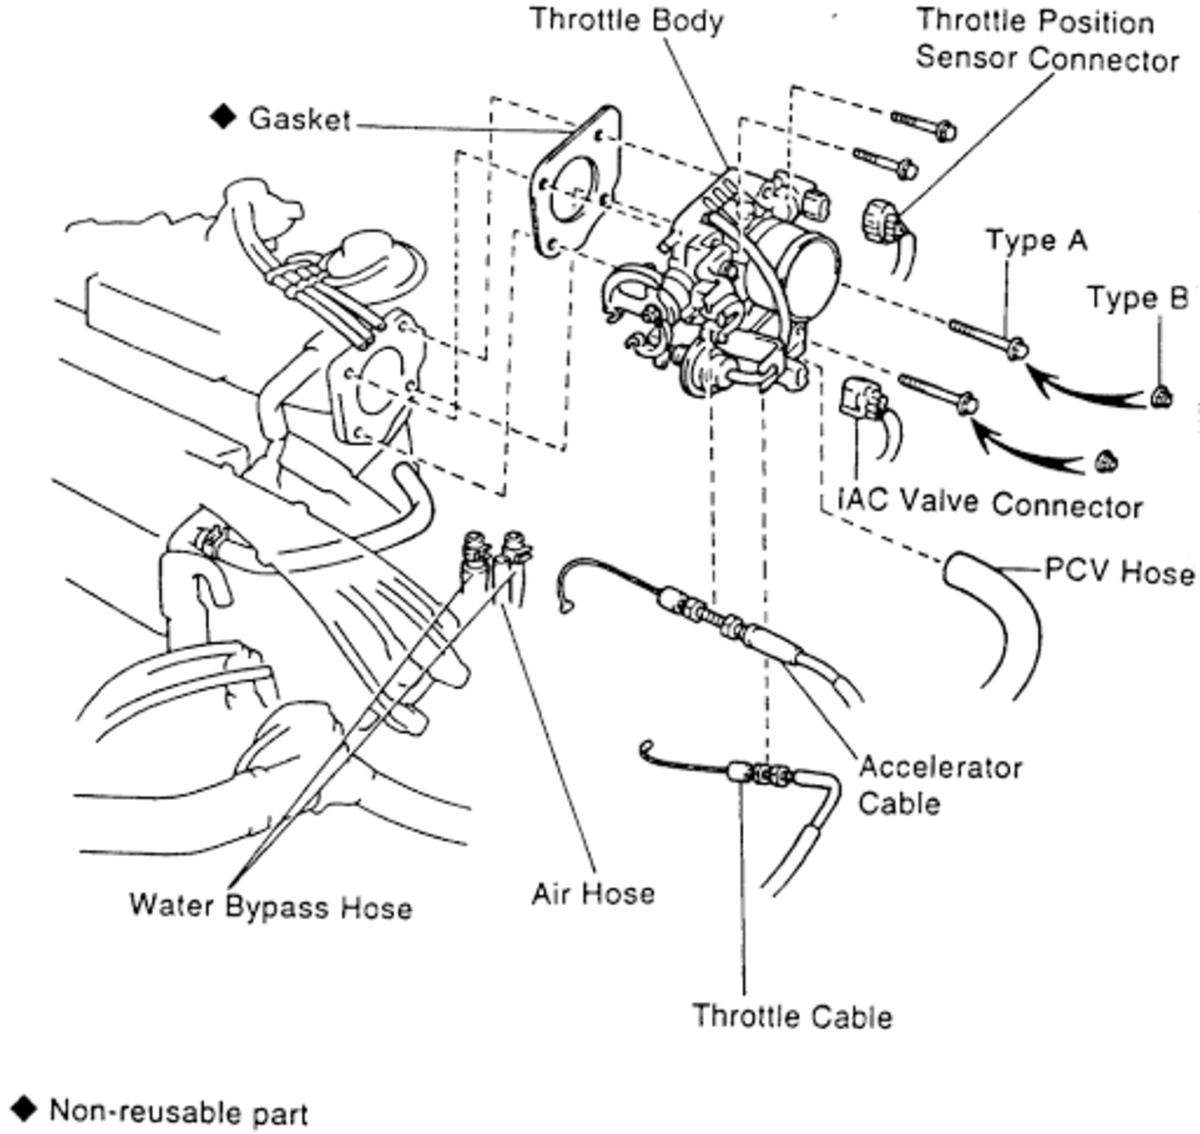 Toyota 5SFE throttle body configuration